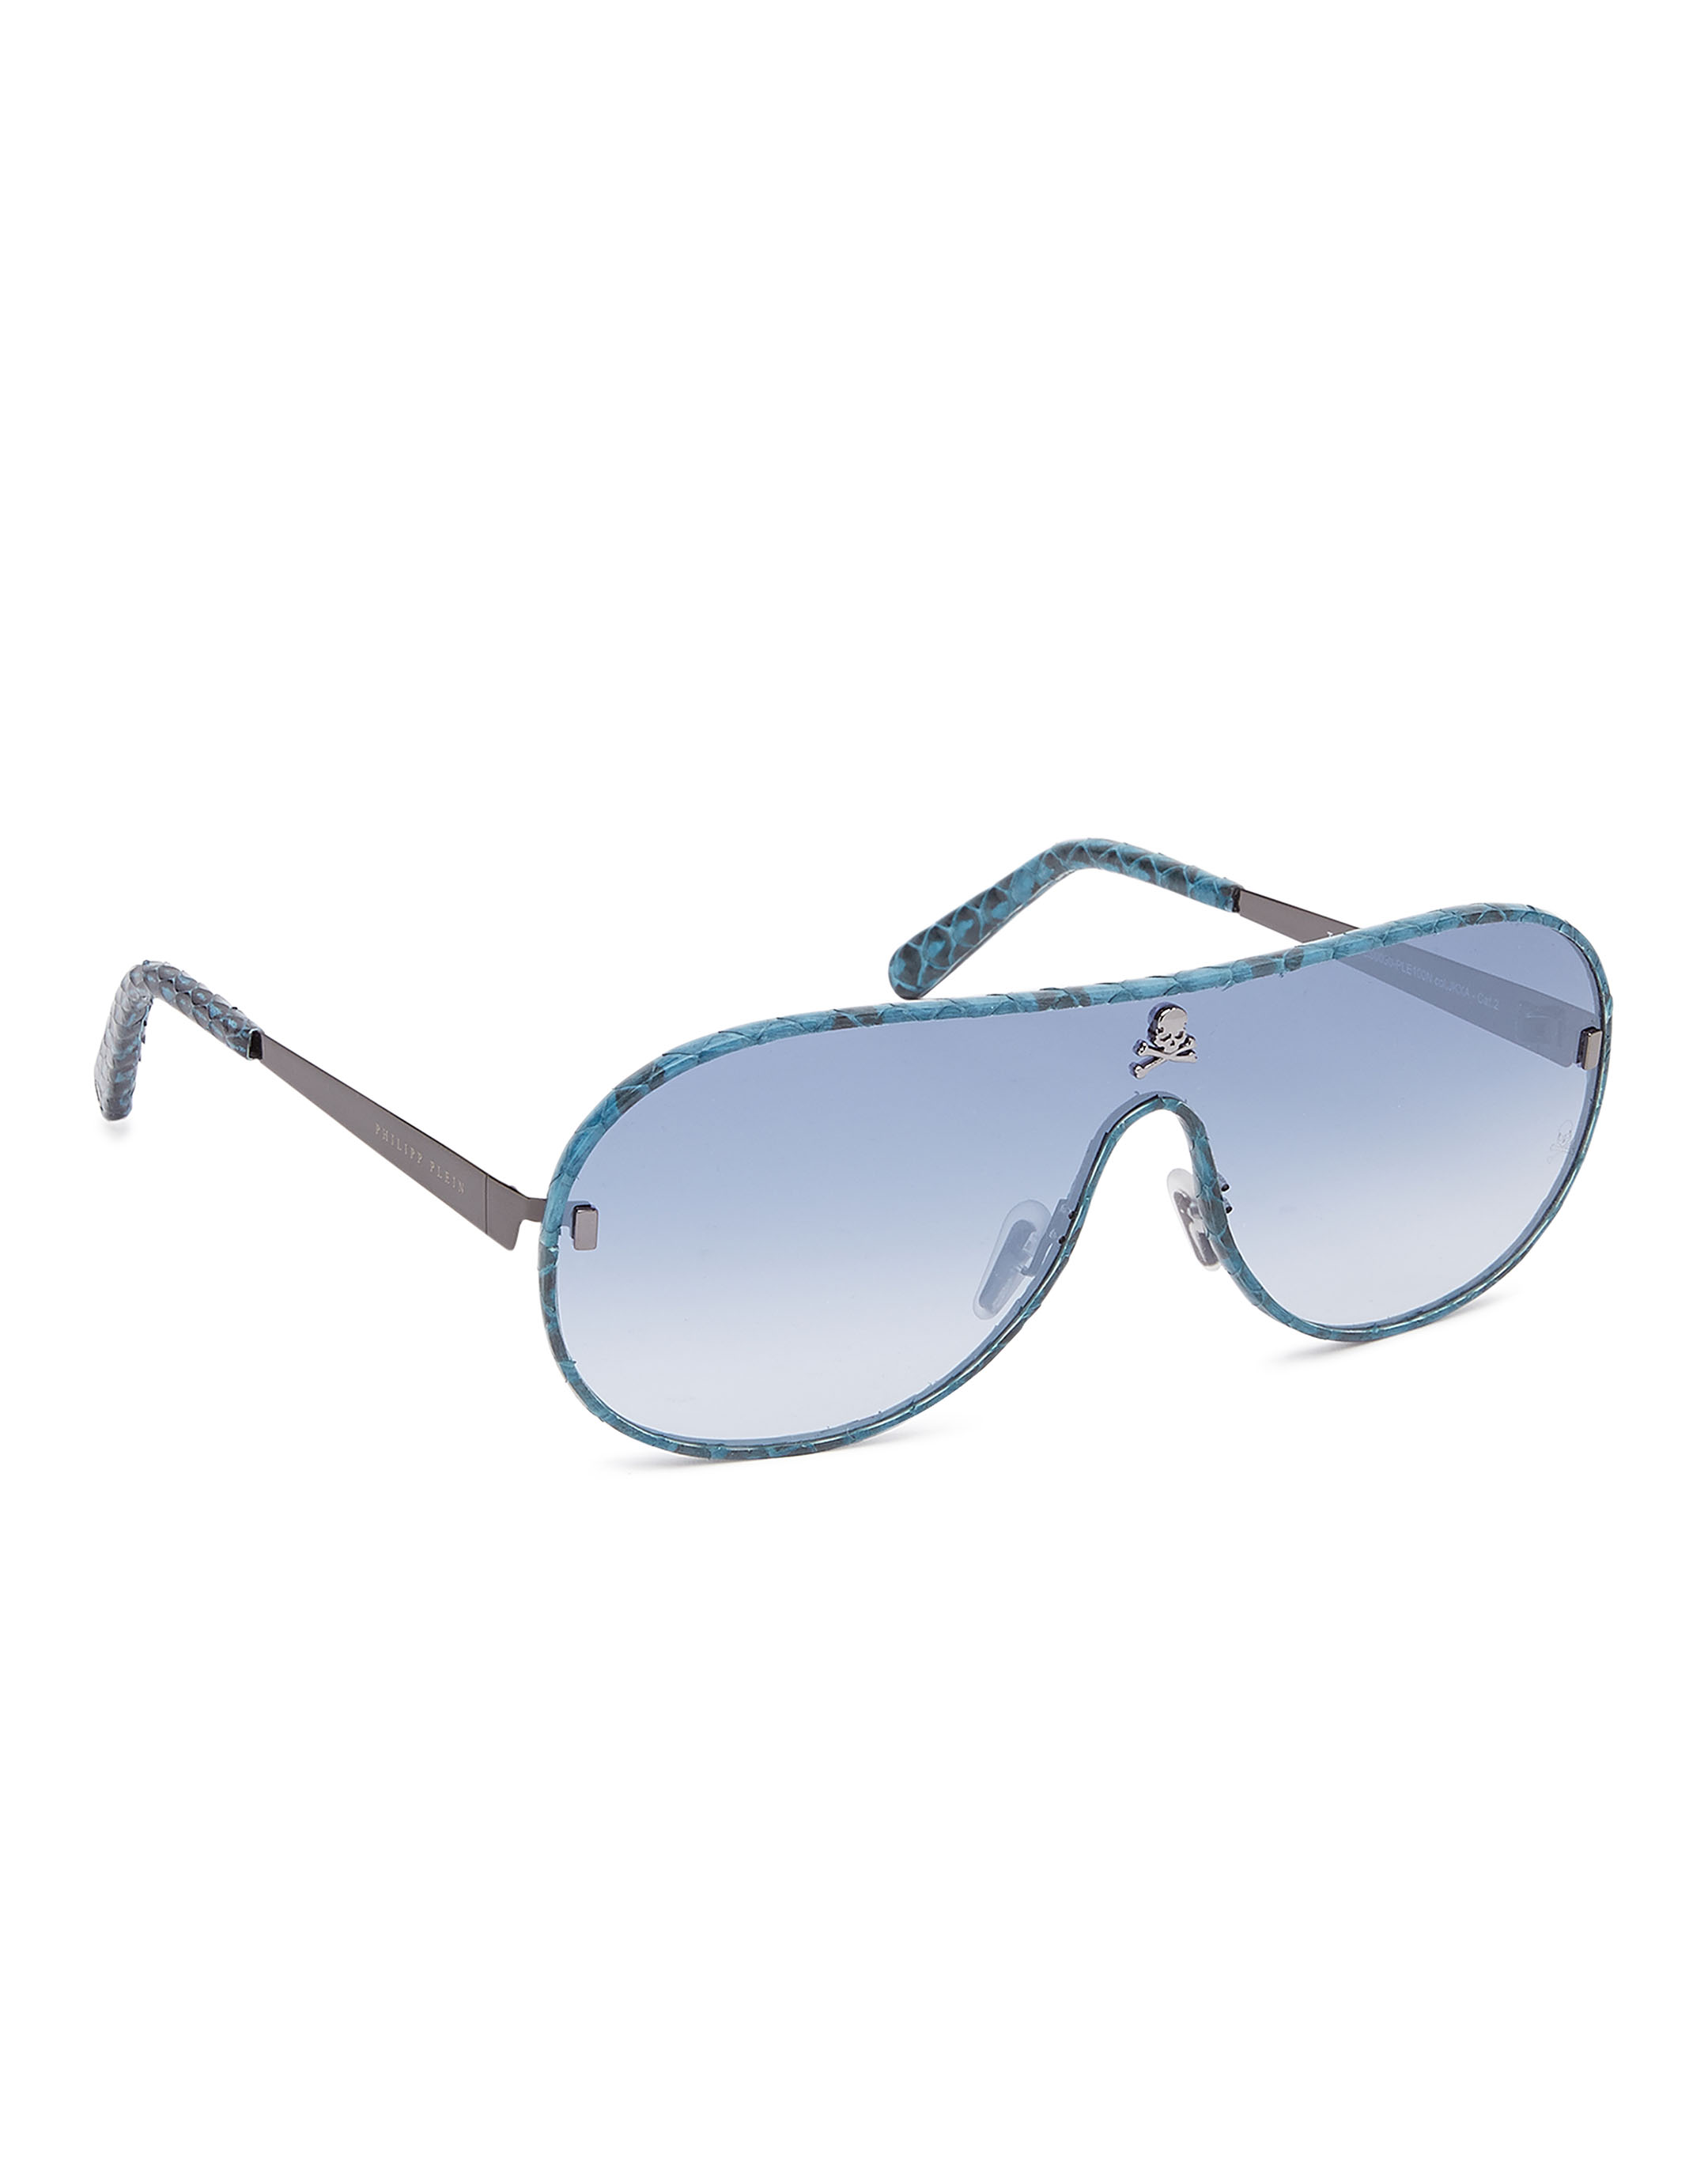 Leather Target Sunglasses Plein Philipp | Outlet